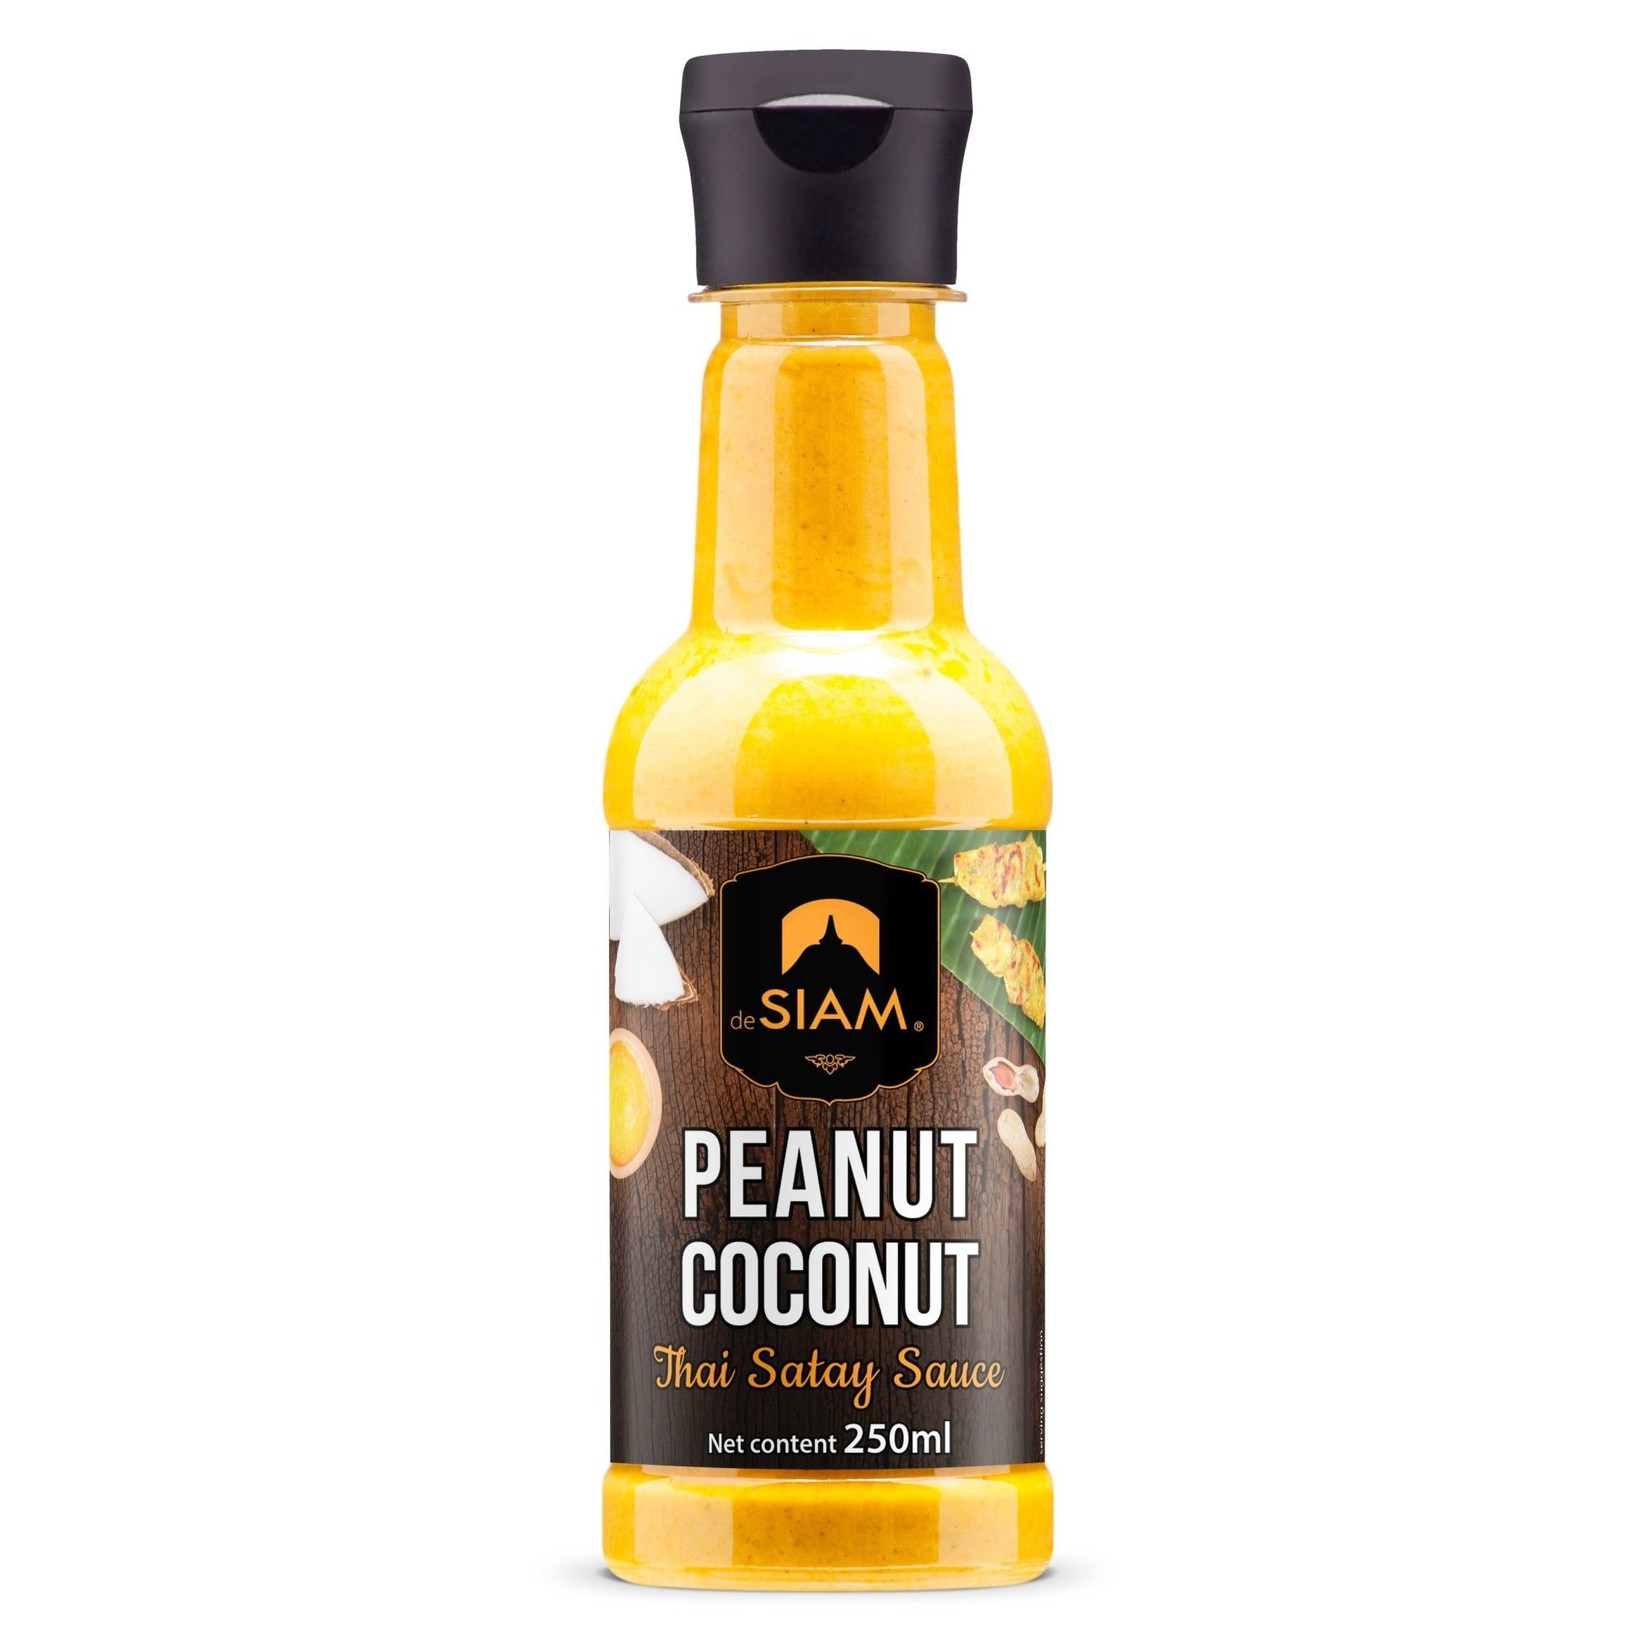 DE SIAM DE SIAM Peanut Coconut Grilling Sauce 250ml